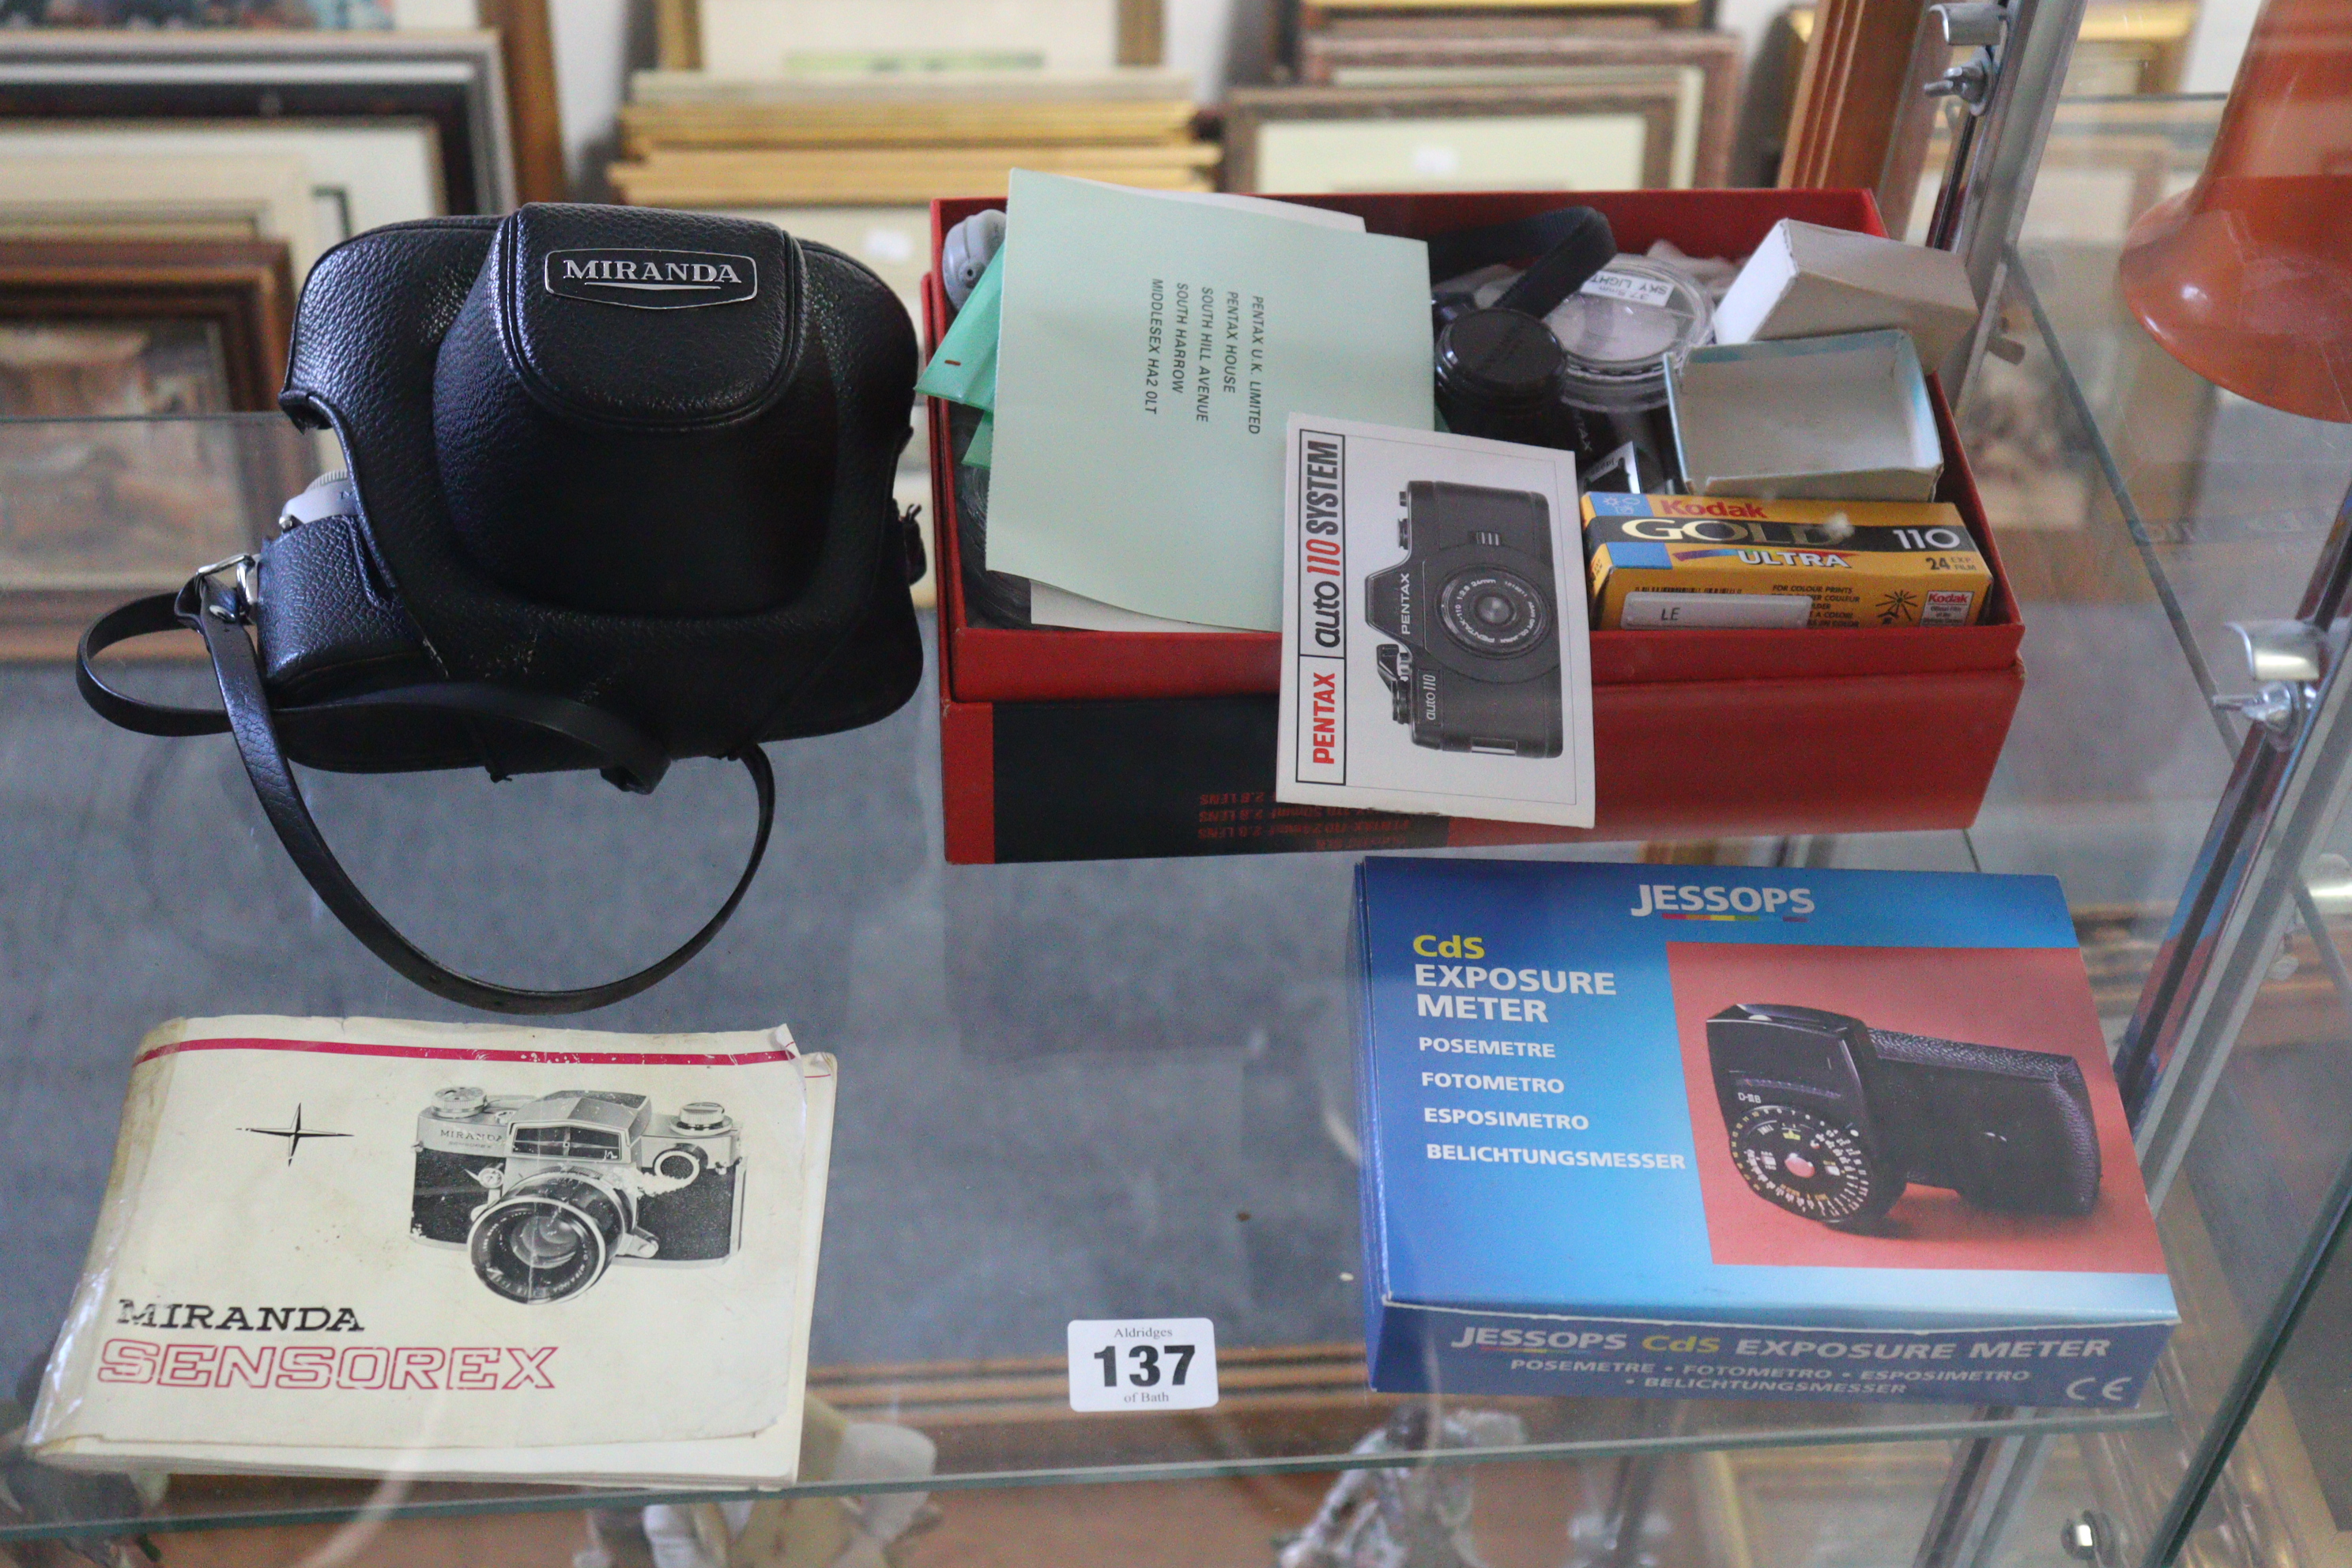 A Miranda “Sensorex” 50mm camera, with case; & a Pentax “Auto 110” camera, with various accessories,